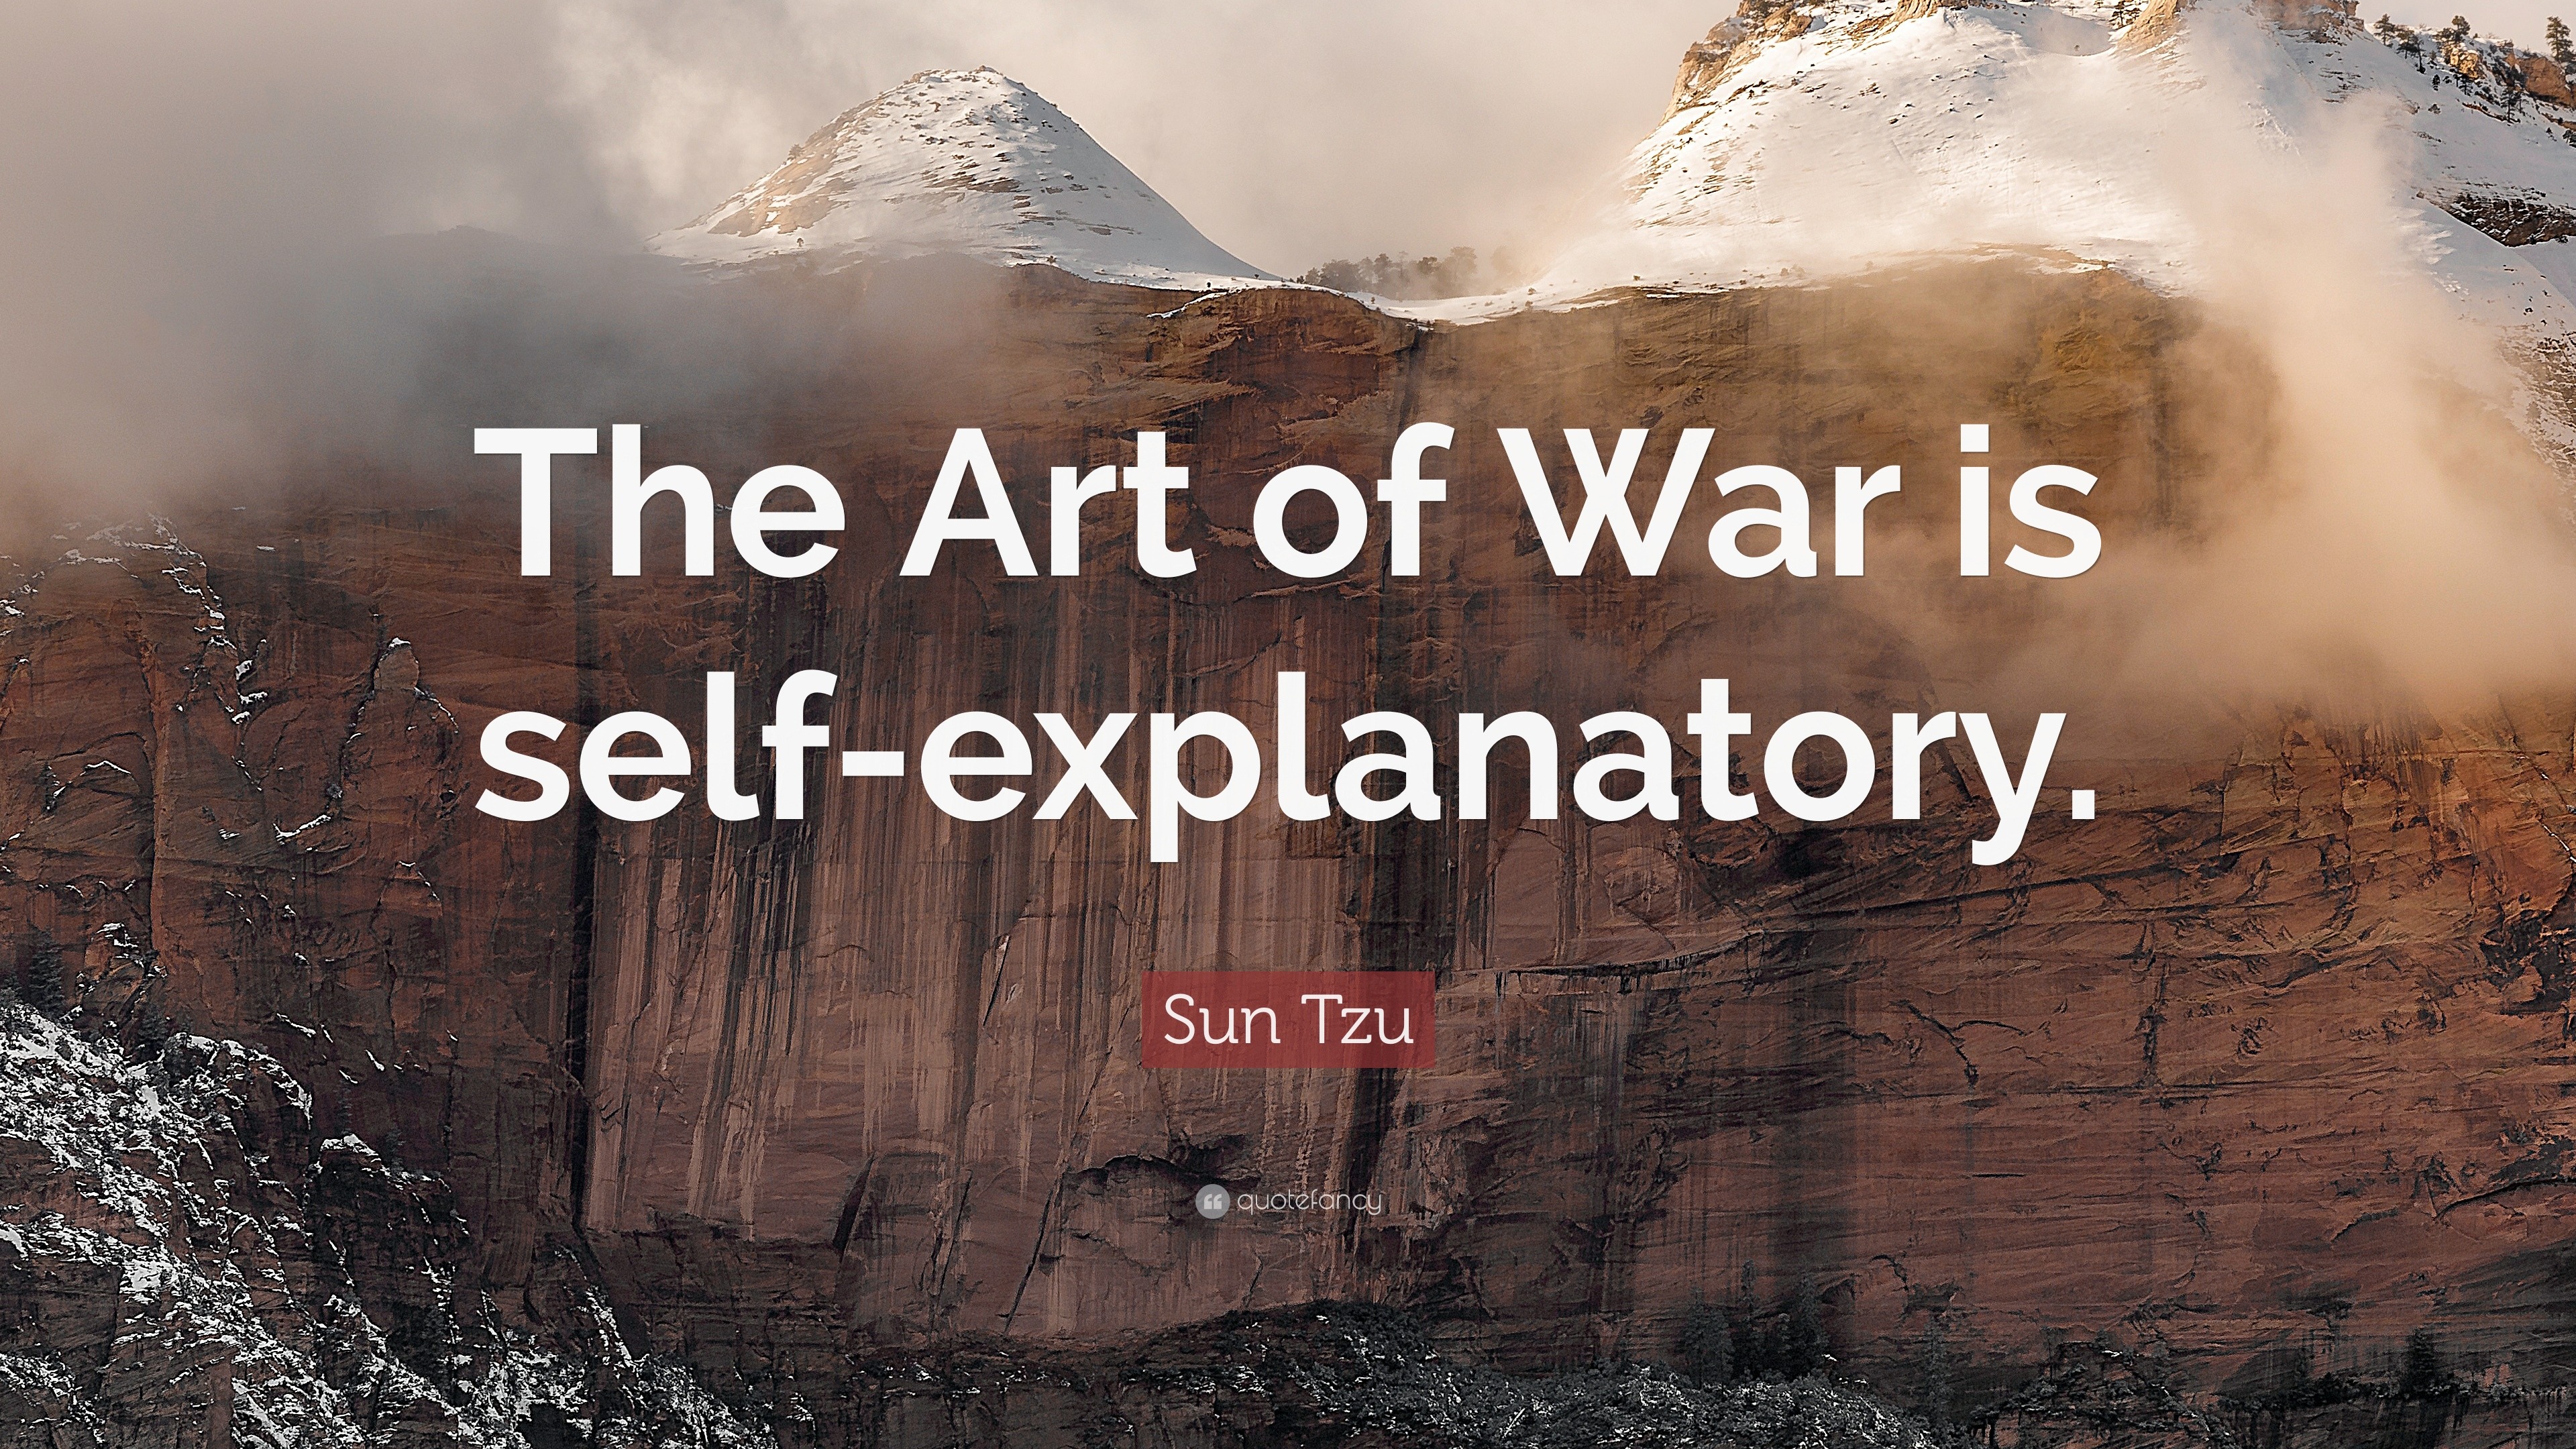 Sun Tzu Quote “The Art of War is selfexplanatory.” (12